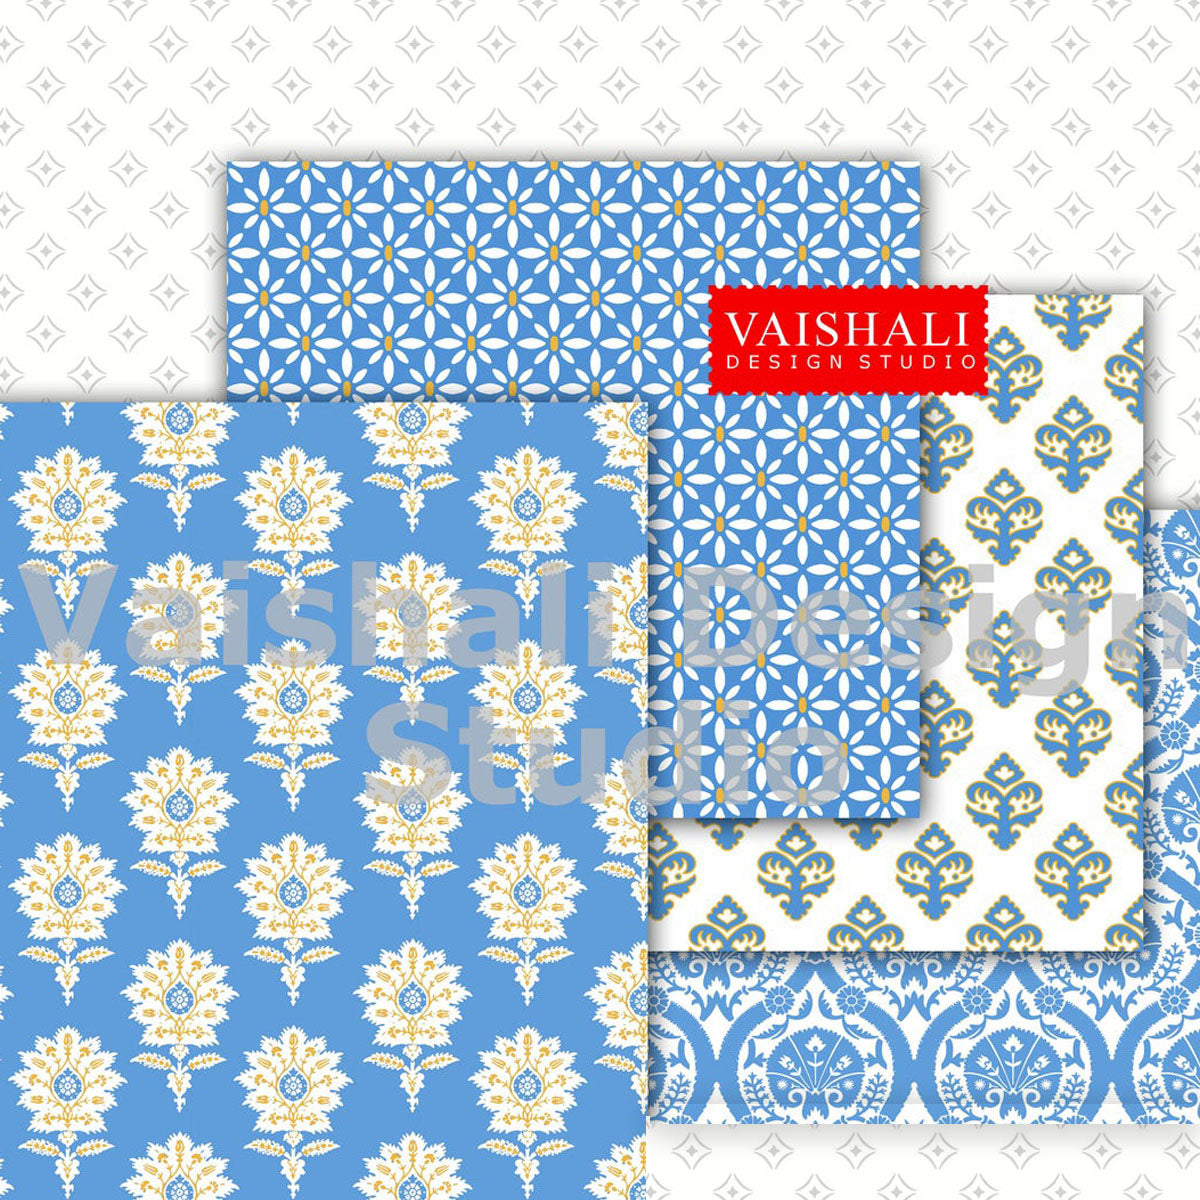 Block print, ethnic, Digital print pack, blue colour, 4 sheets